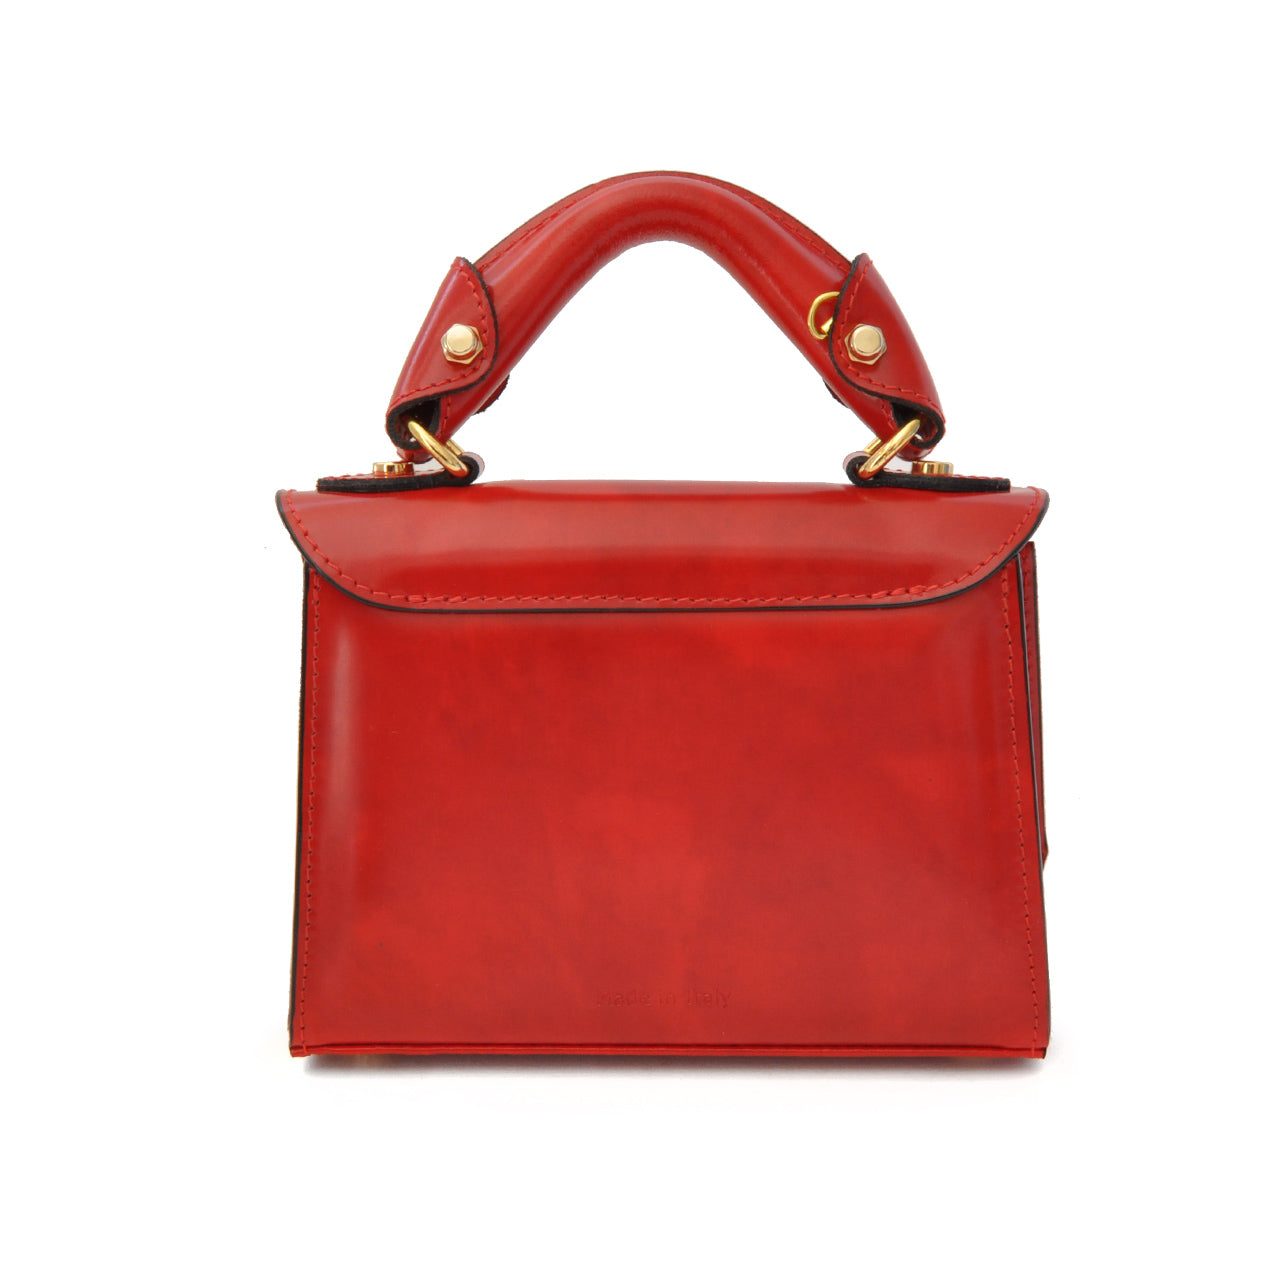 Pratesi Lucignano Small Handbag in genuine Italian leather